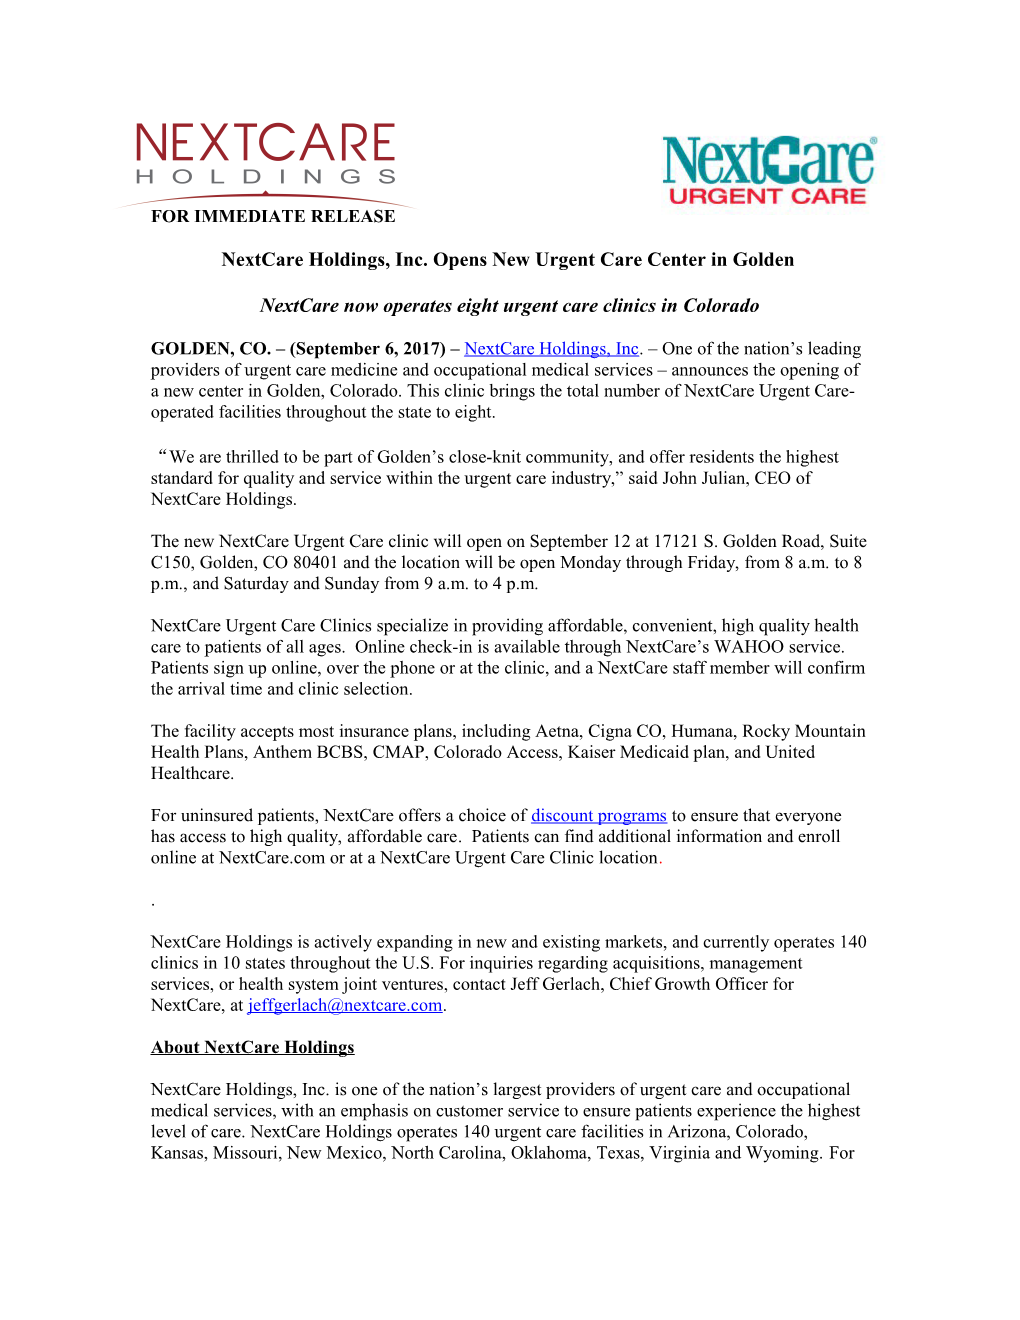 Nextcare Now Operates Eight Urgent Care Clinics in Colorado